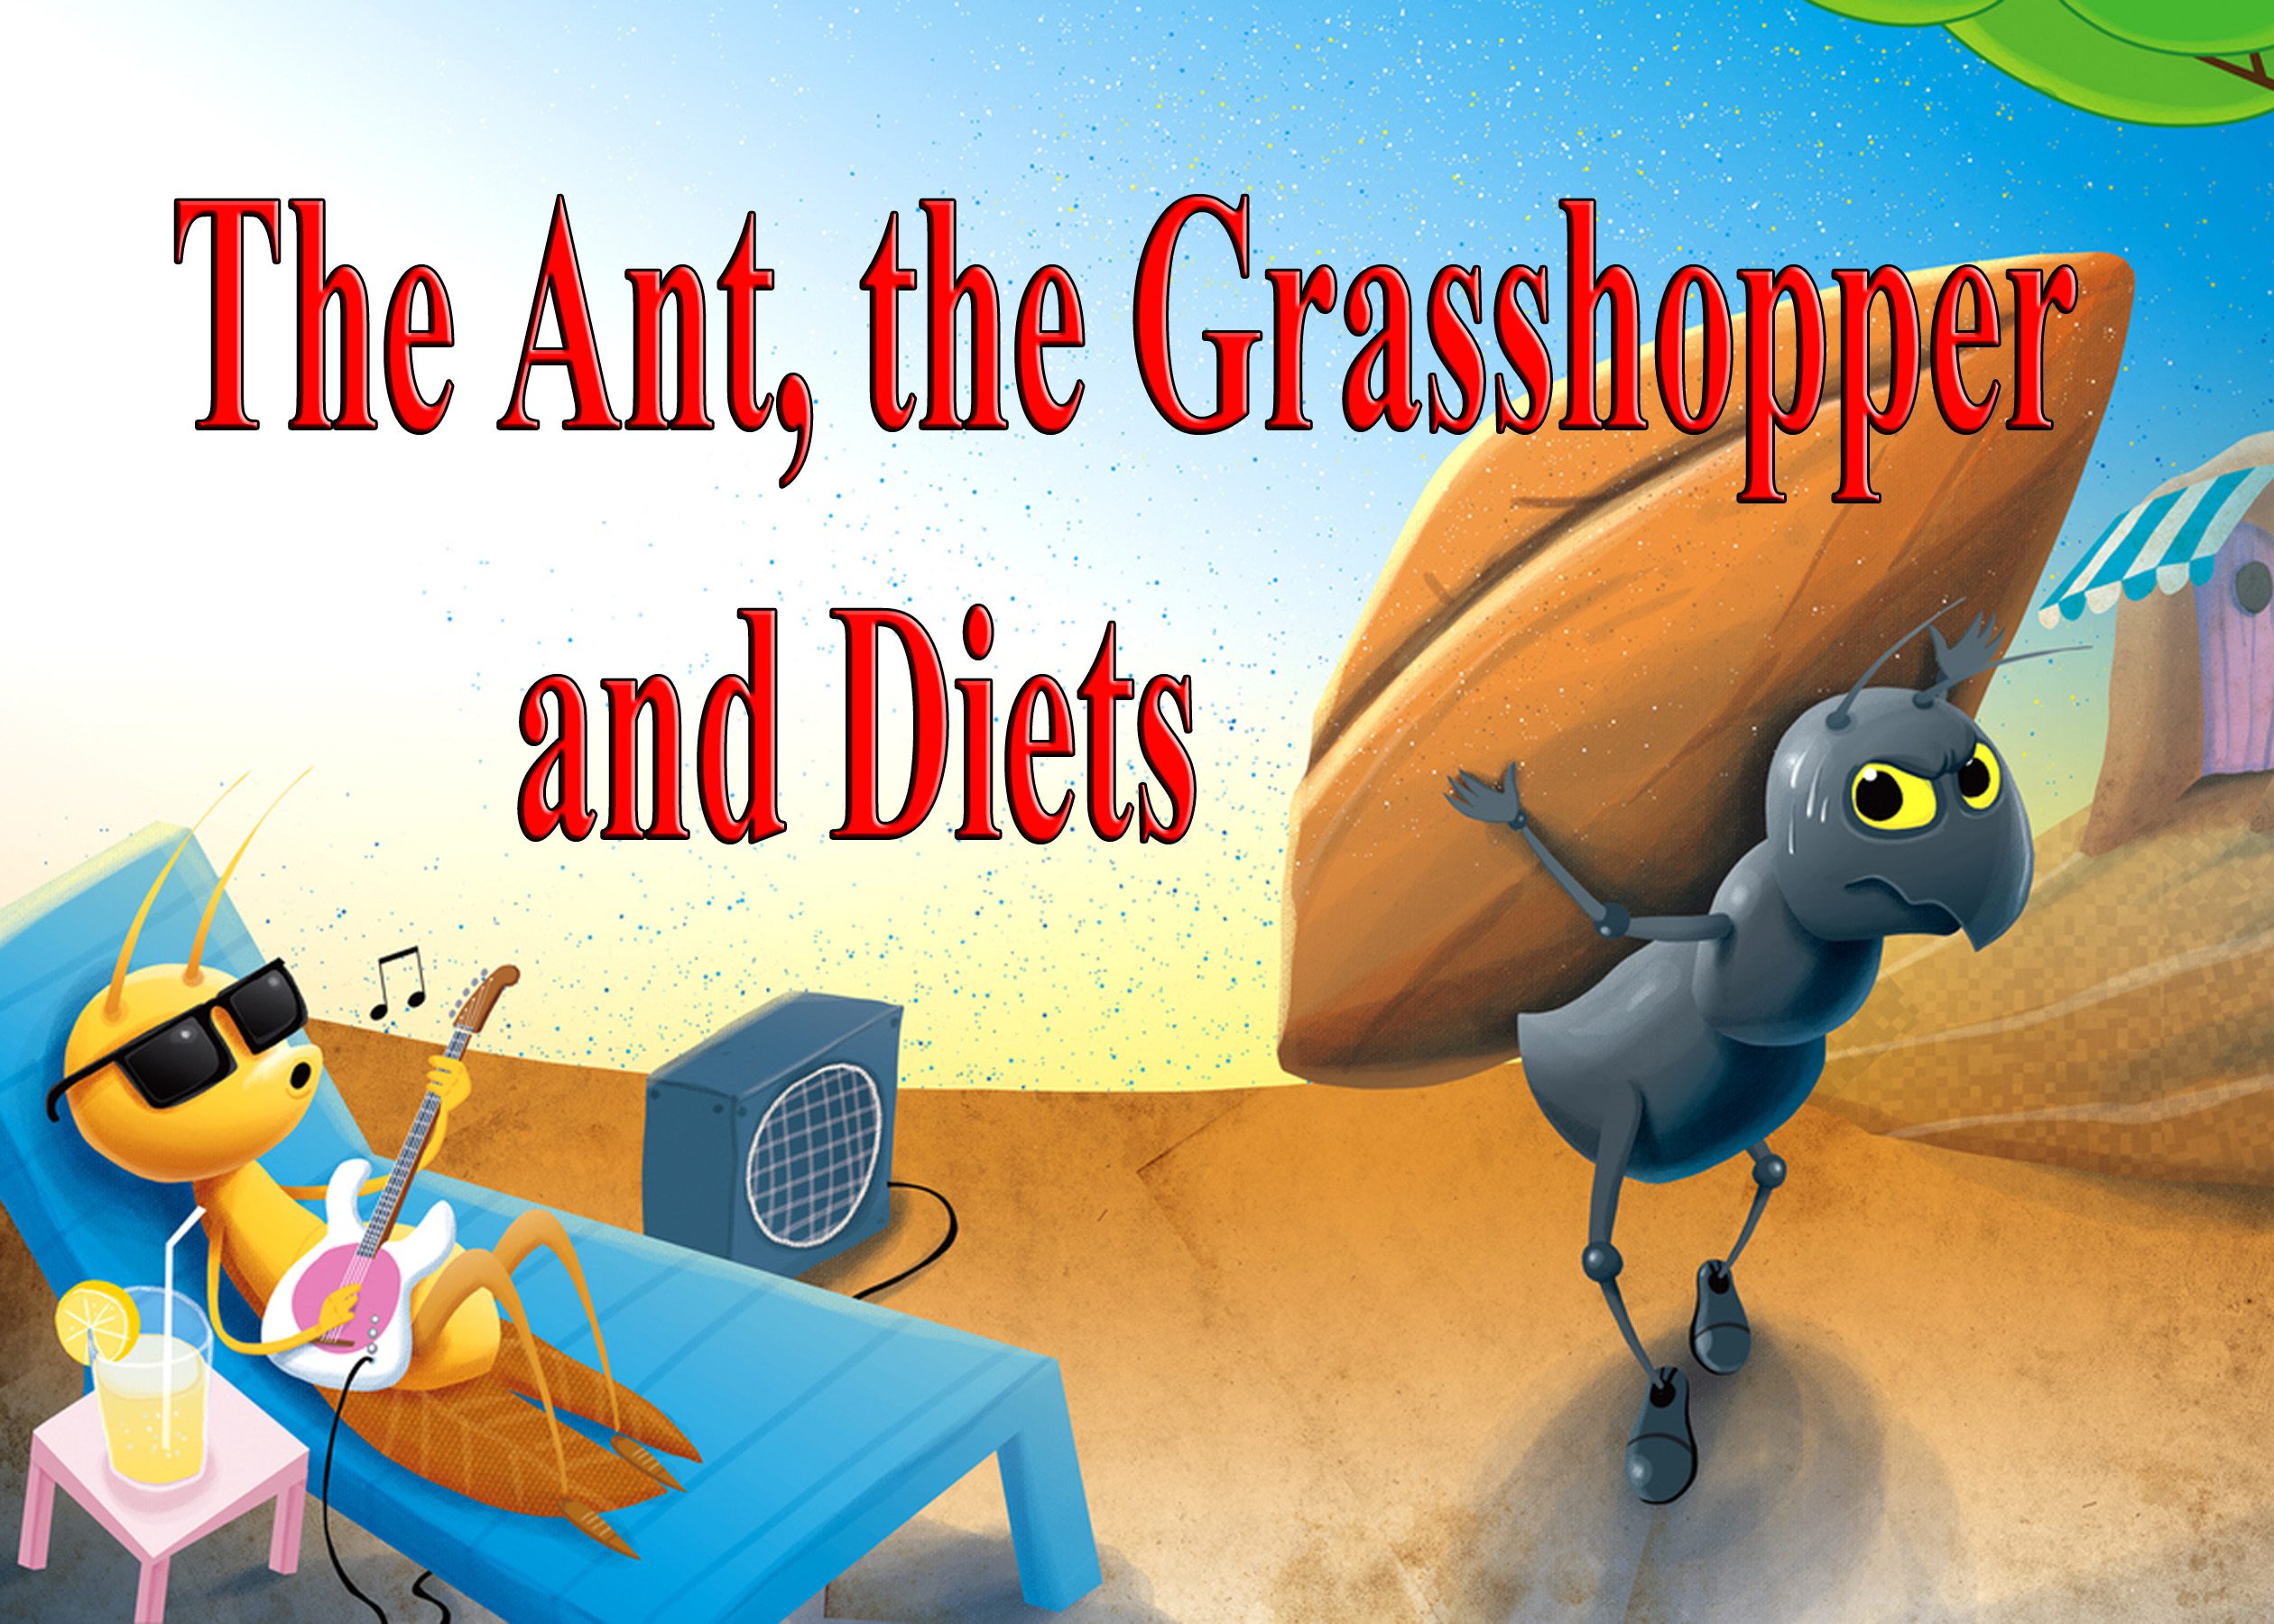 ant and cidada illustration